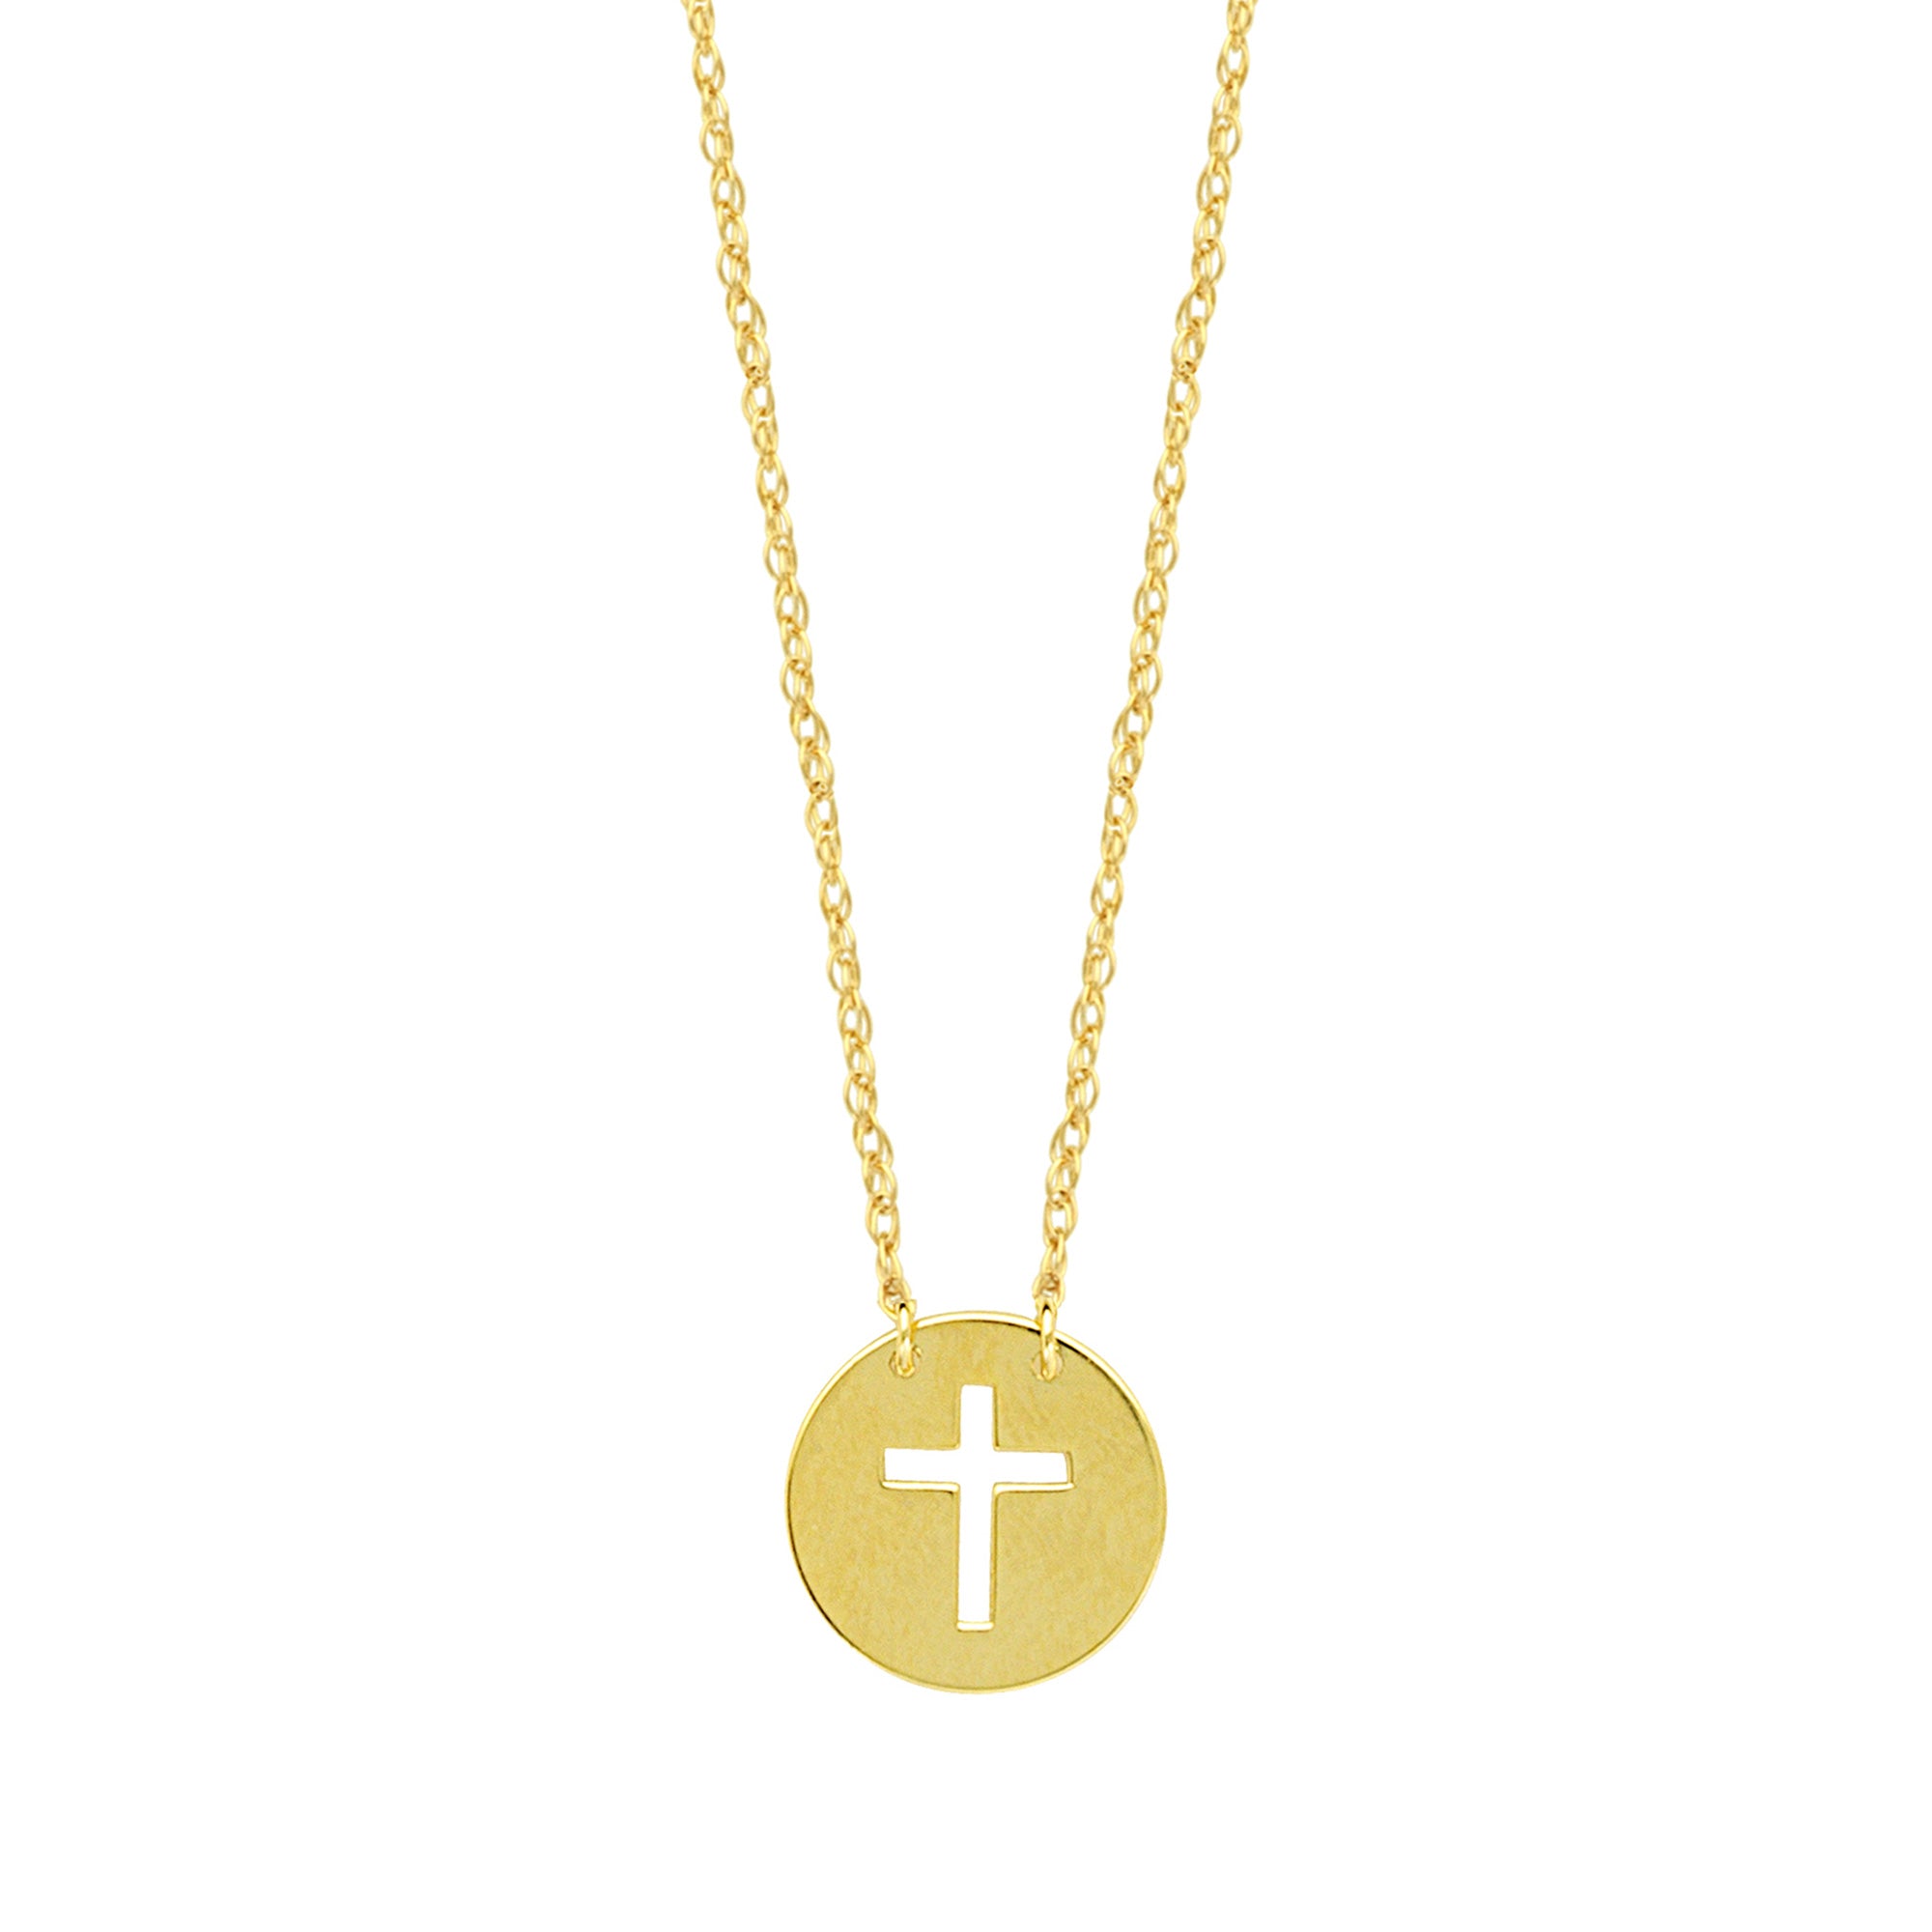 14K Yellow Gold Mini Cross Pendant Necklace, 16" To 18" Adjustable